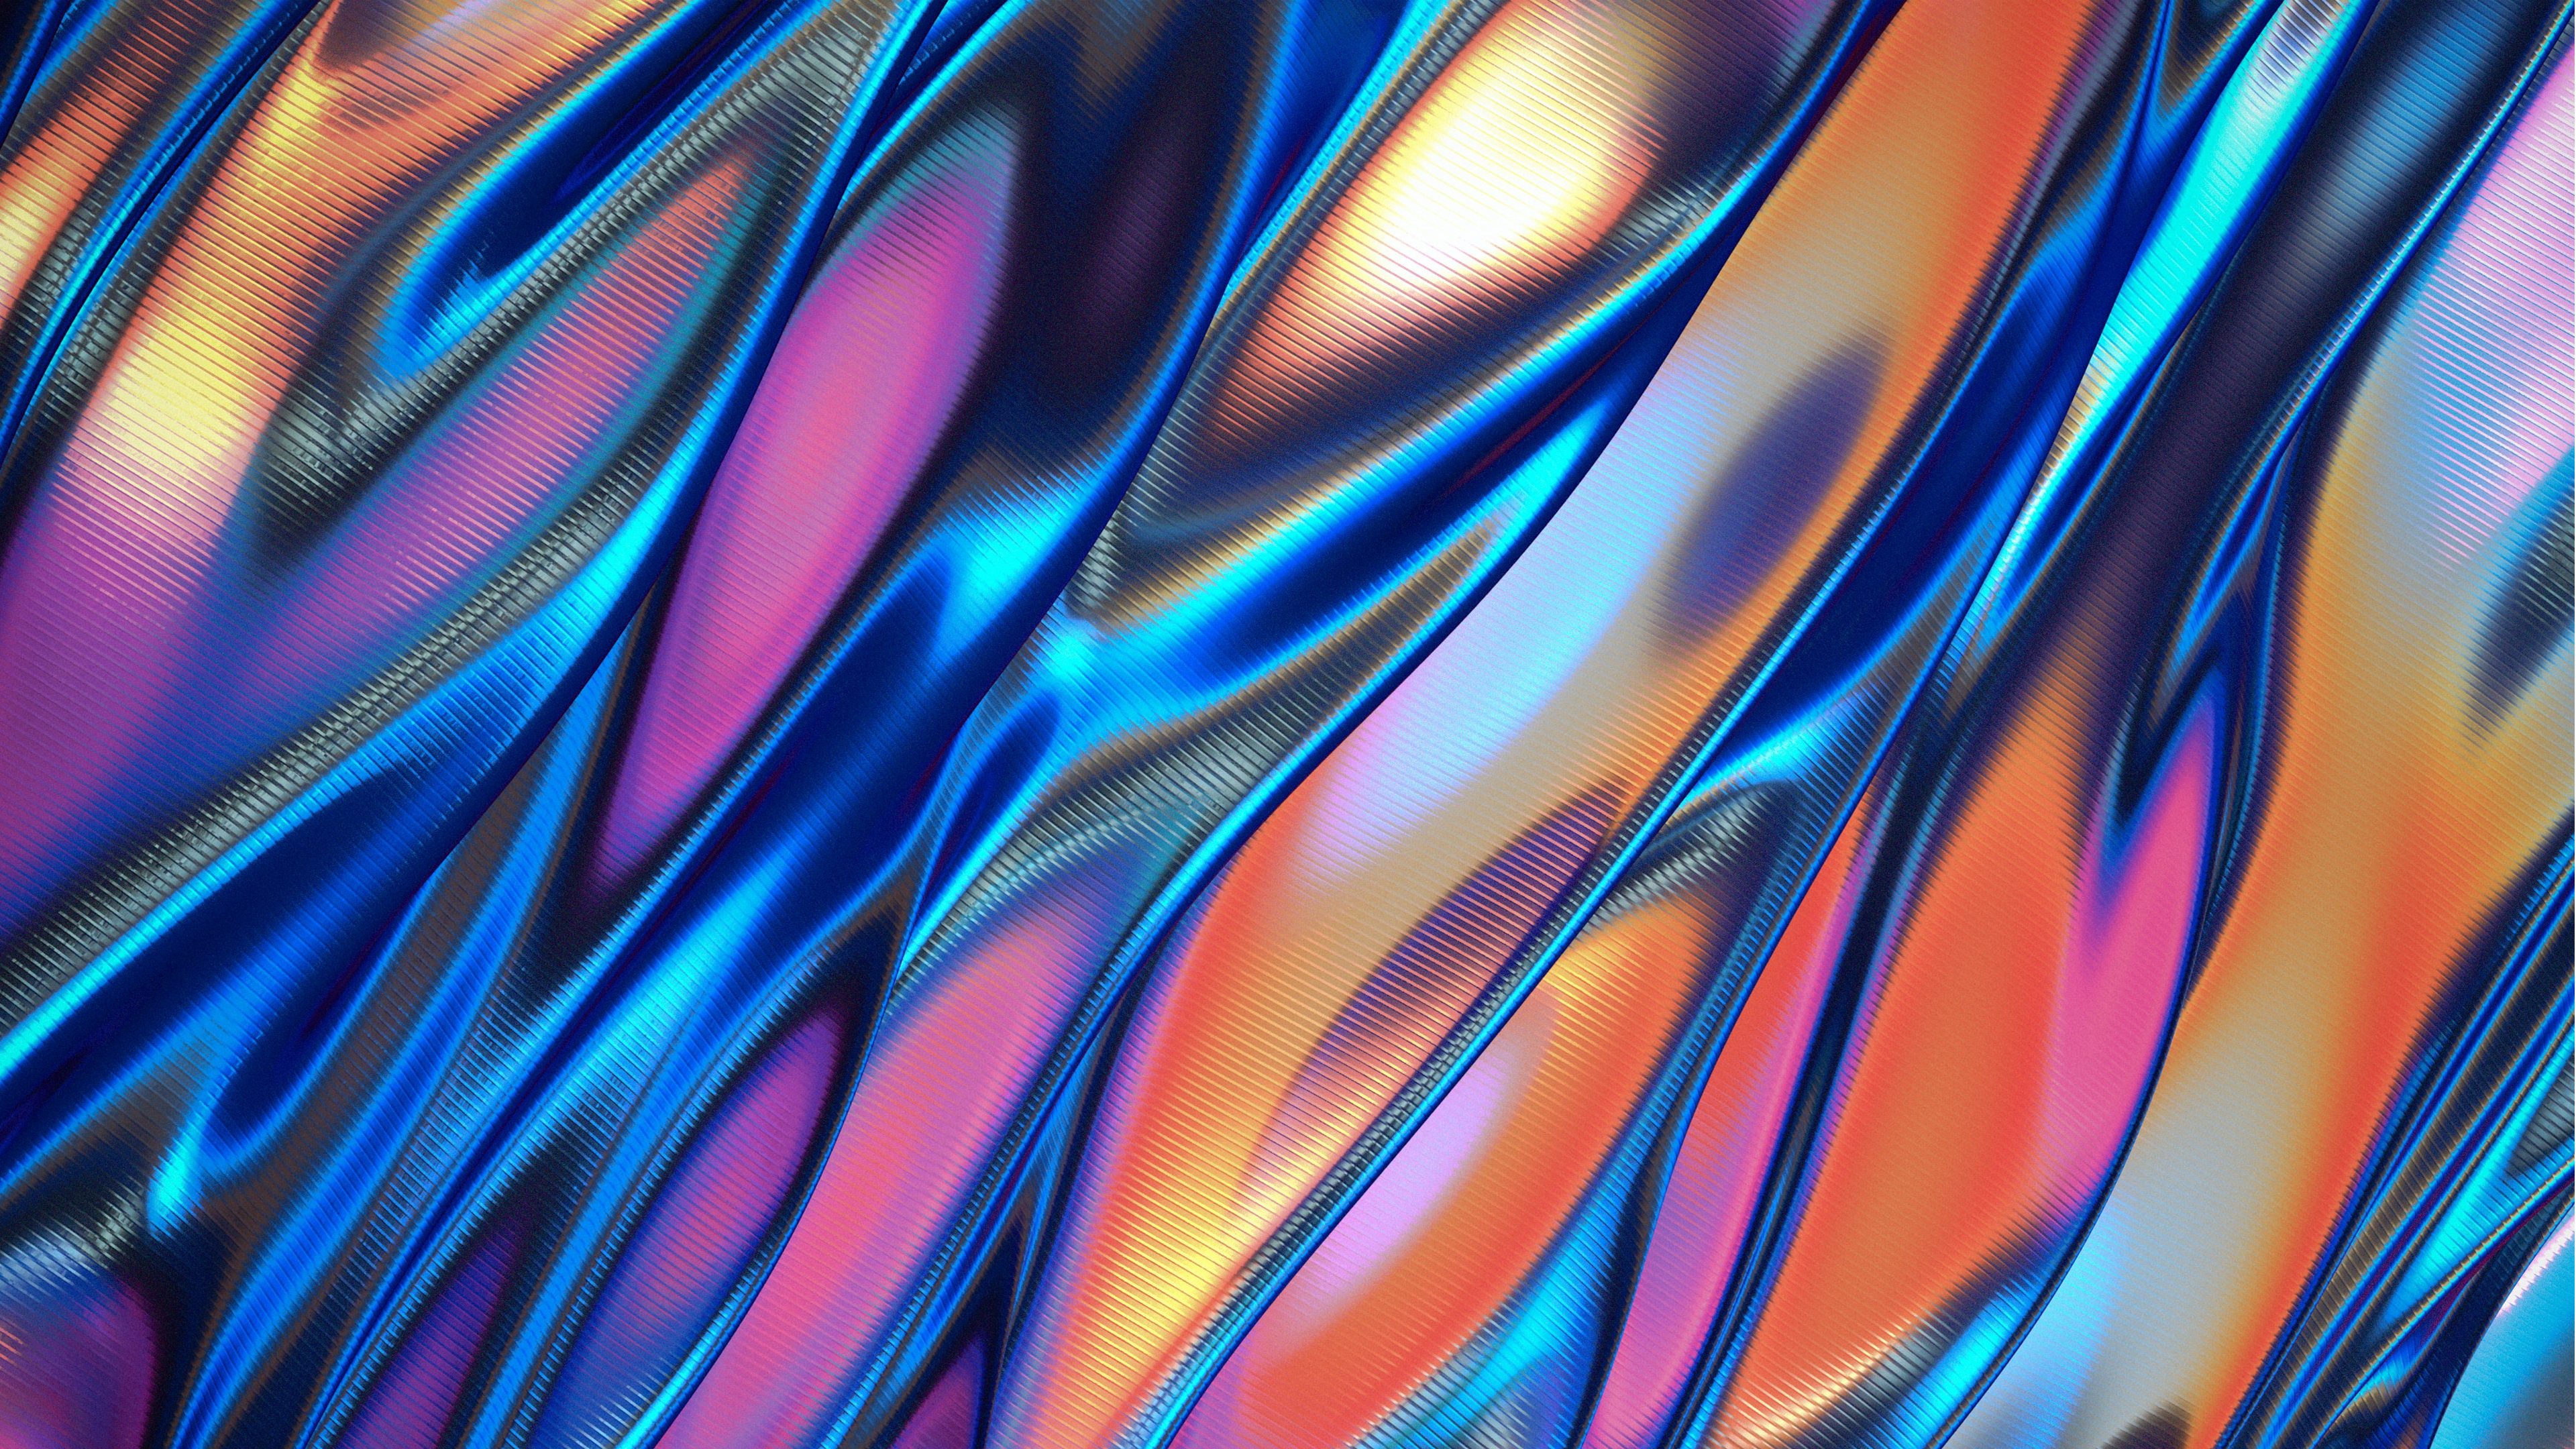 Pattern Waves Digital Digital Art Artwork Illustration Texture Wrinkles Abstract Colorful 3840x2160